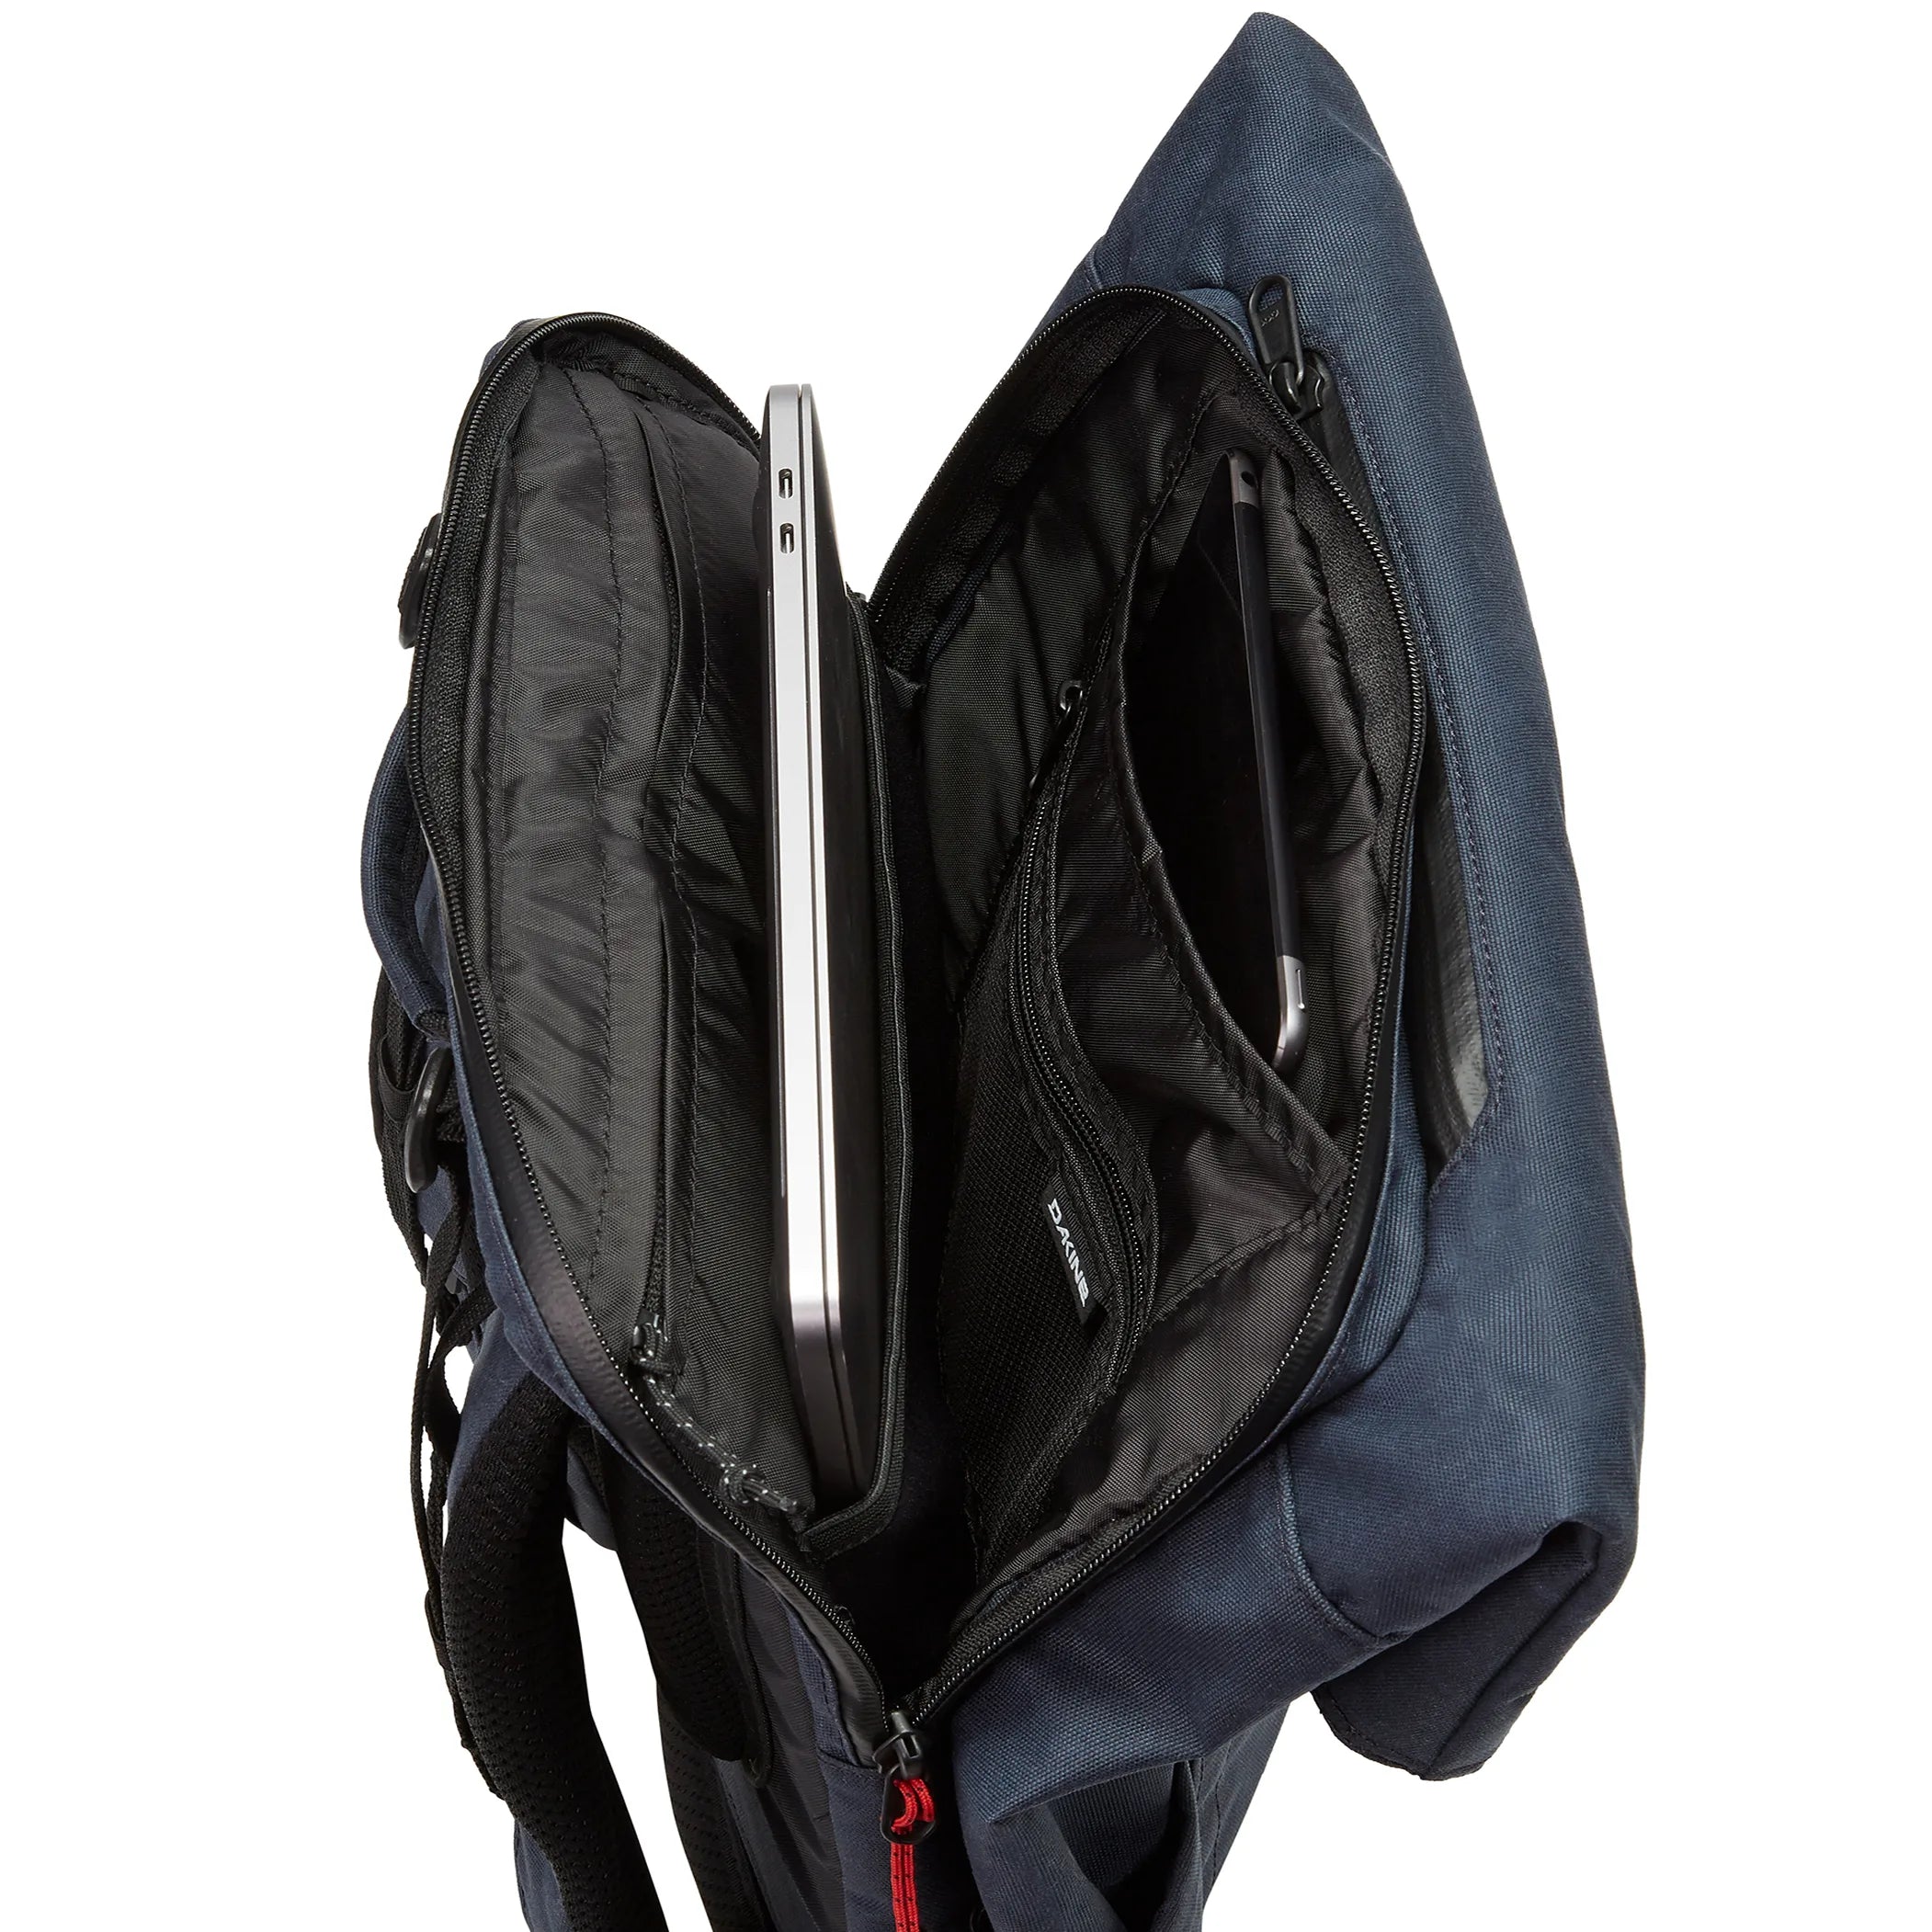 Dakine Packs & Bags Infinity Pack 21L Rucksack 46 cm - dark ivy